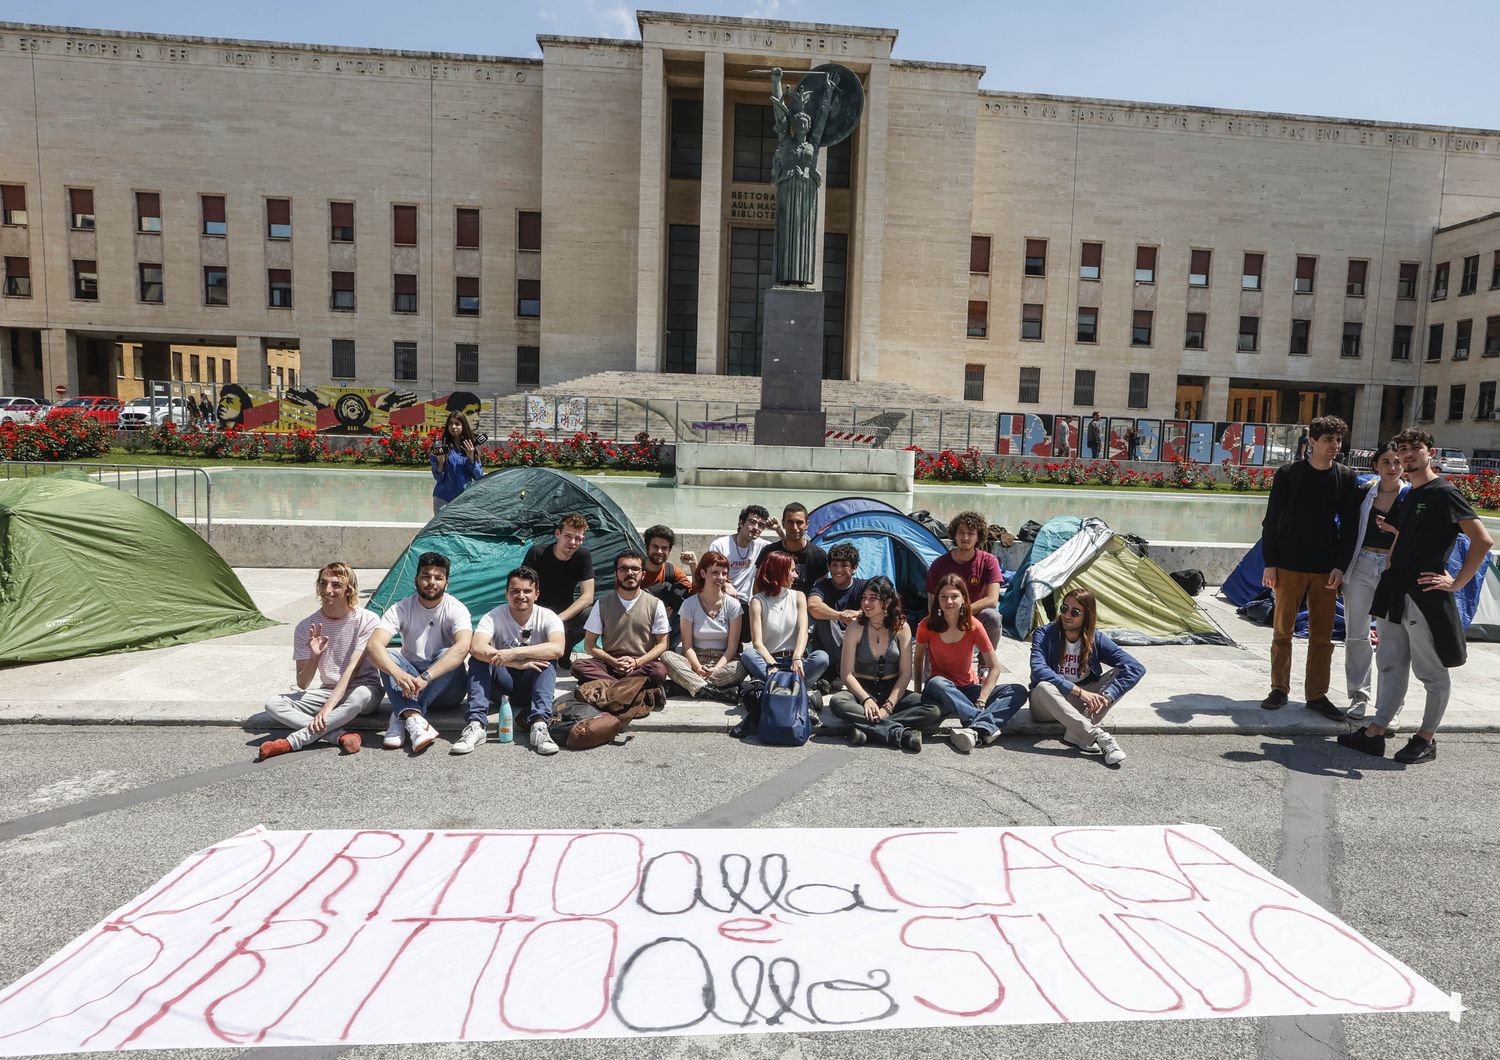 caro affitti roma milano firenze servono posti letto studenti universitari